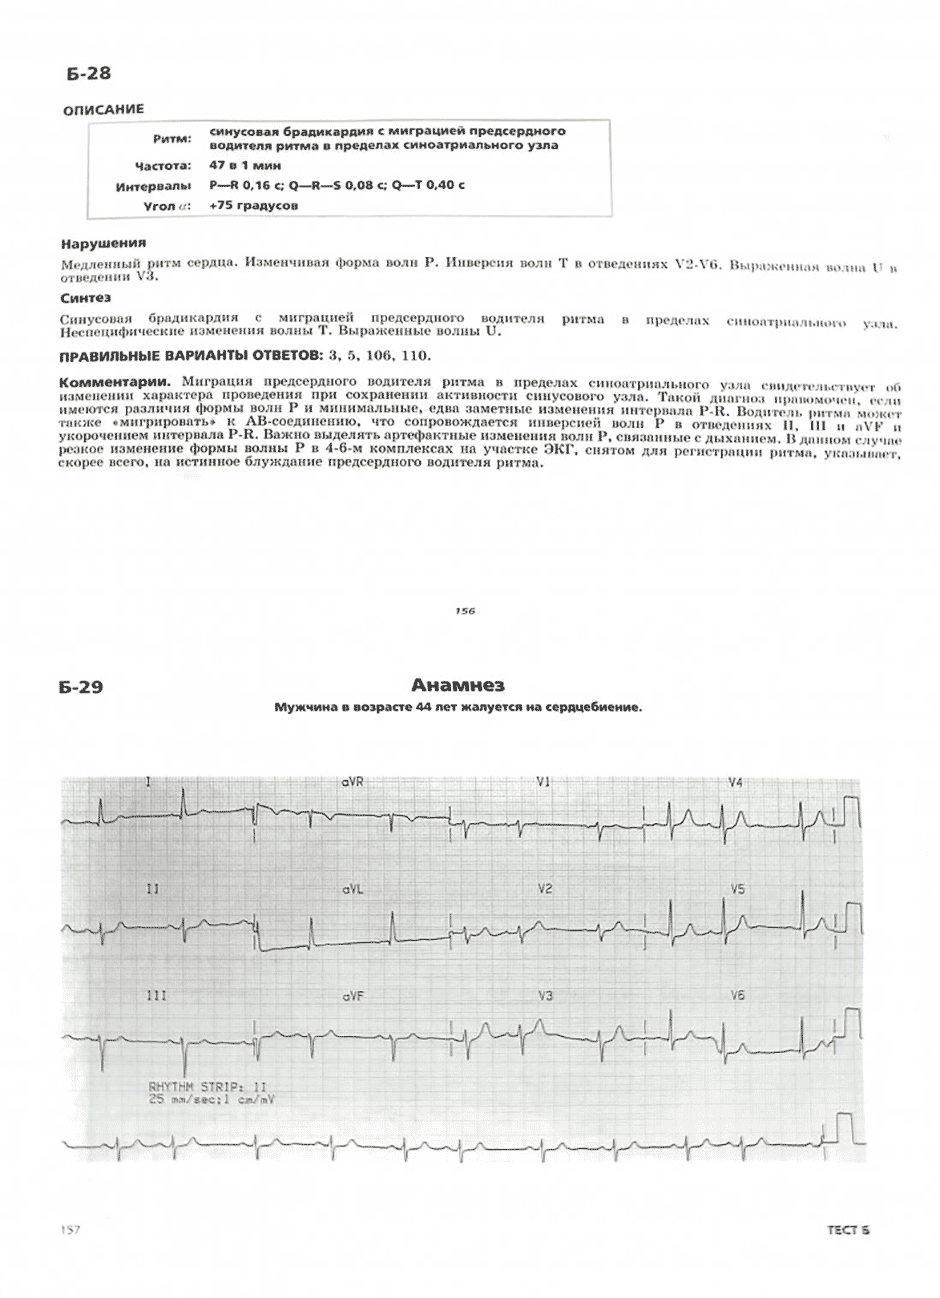 Пример страницы из книги "Клиническая электрокардиография" - Циммерман Франклин